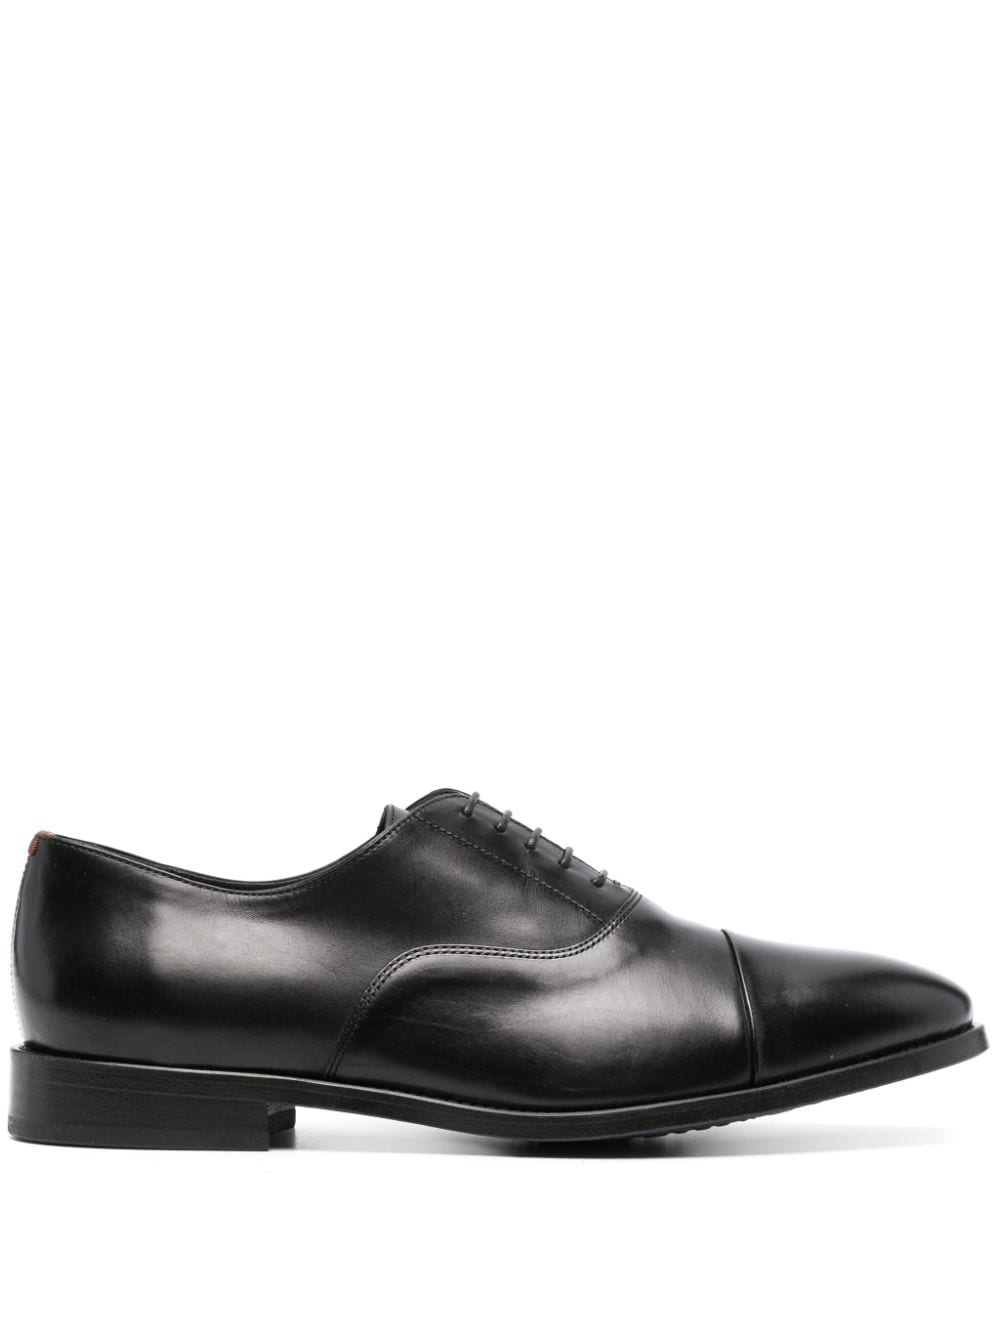 Paul Smith Bari leather Oxford shoes - Black von Paul Smith